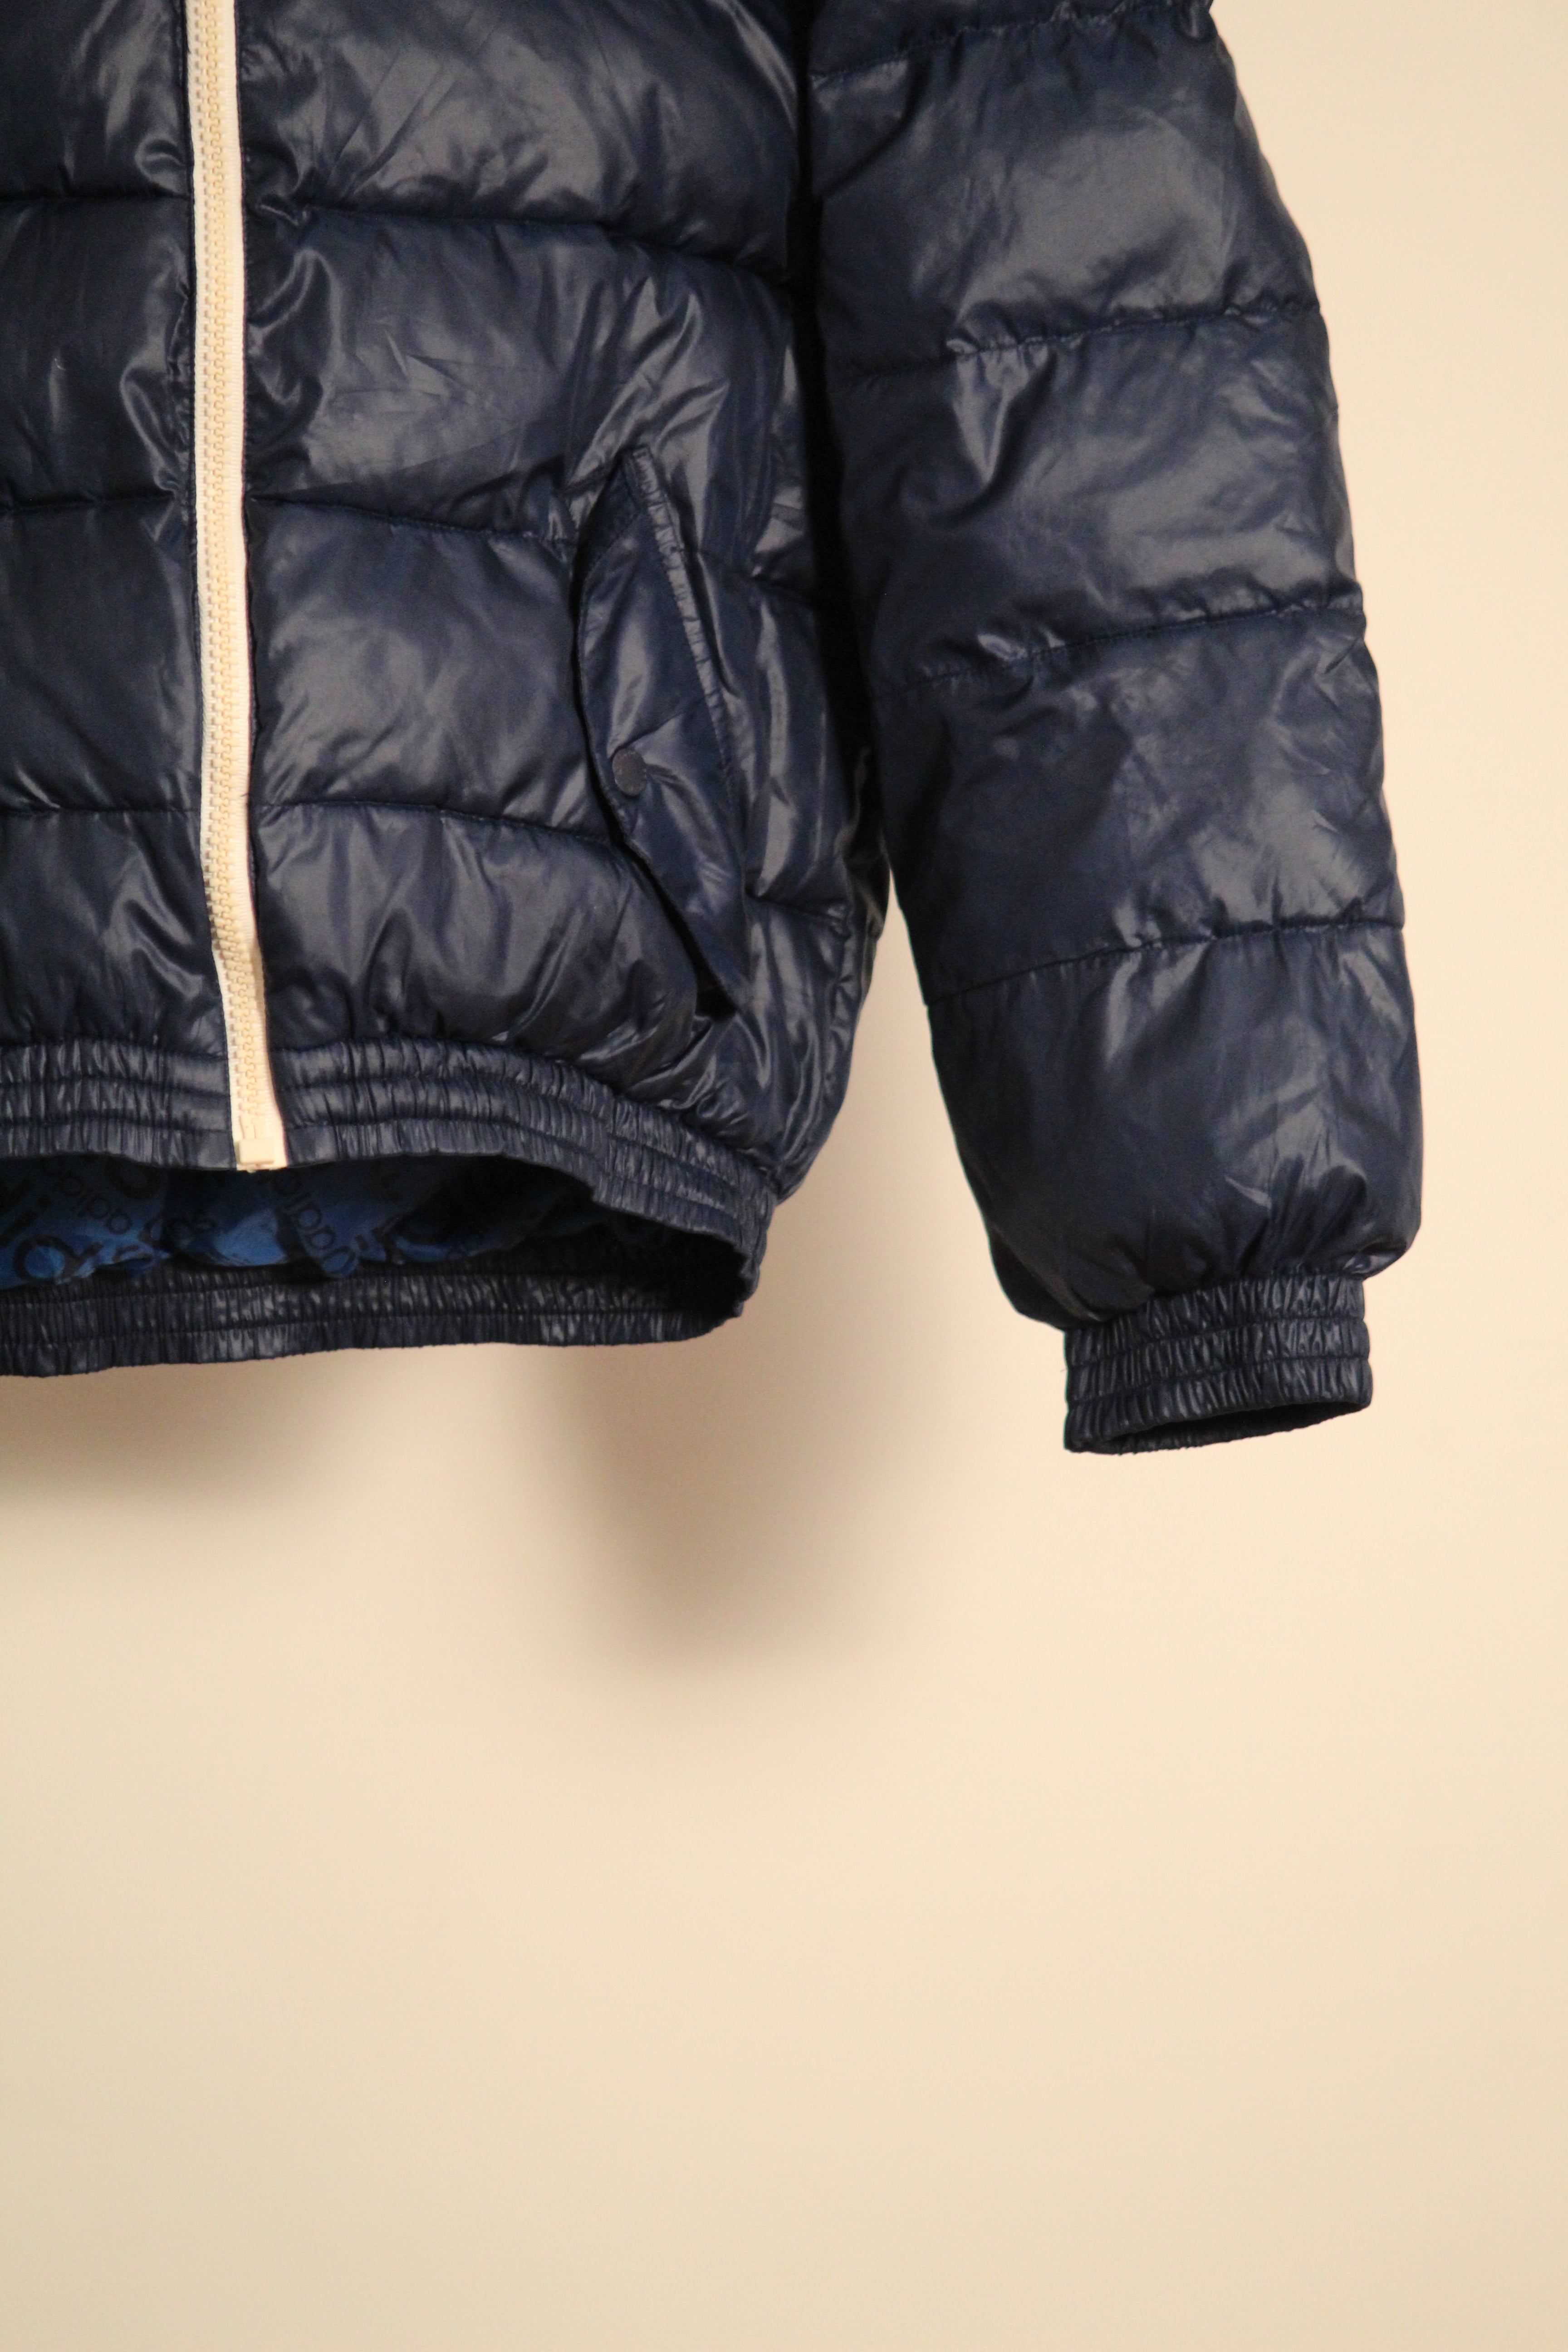 Adidas Originals Winter Jacket